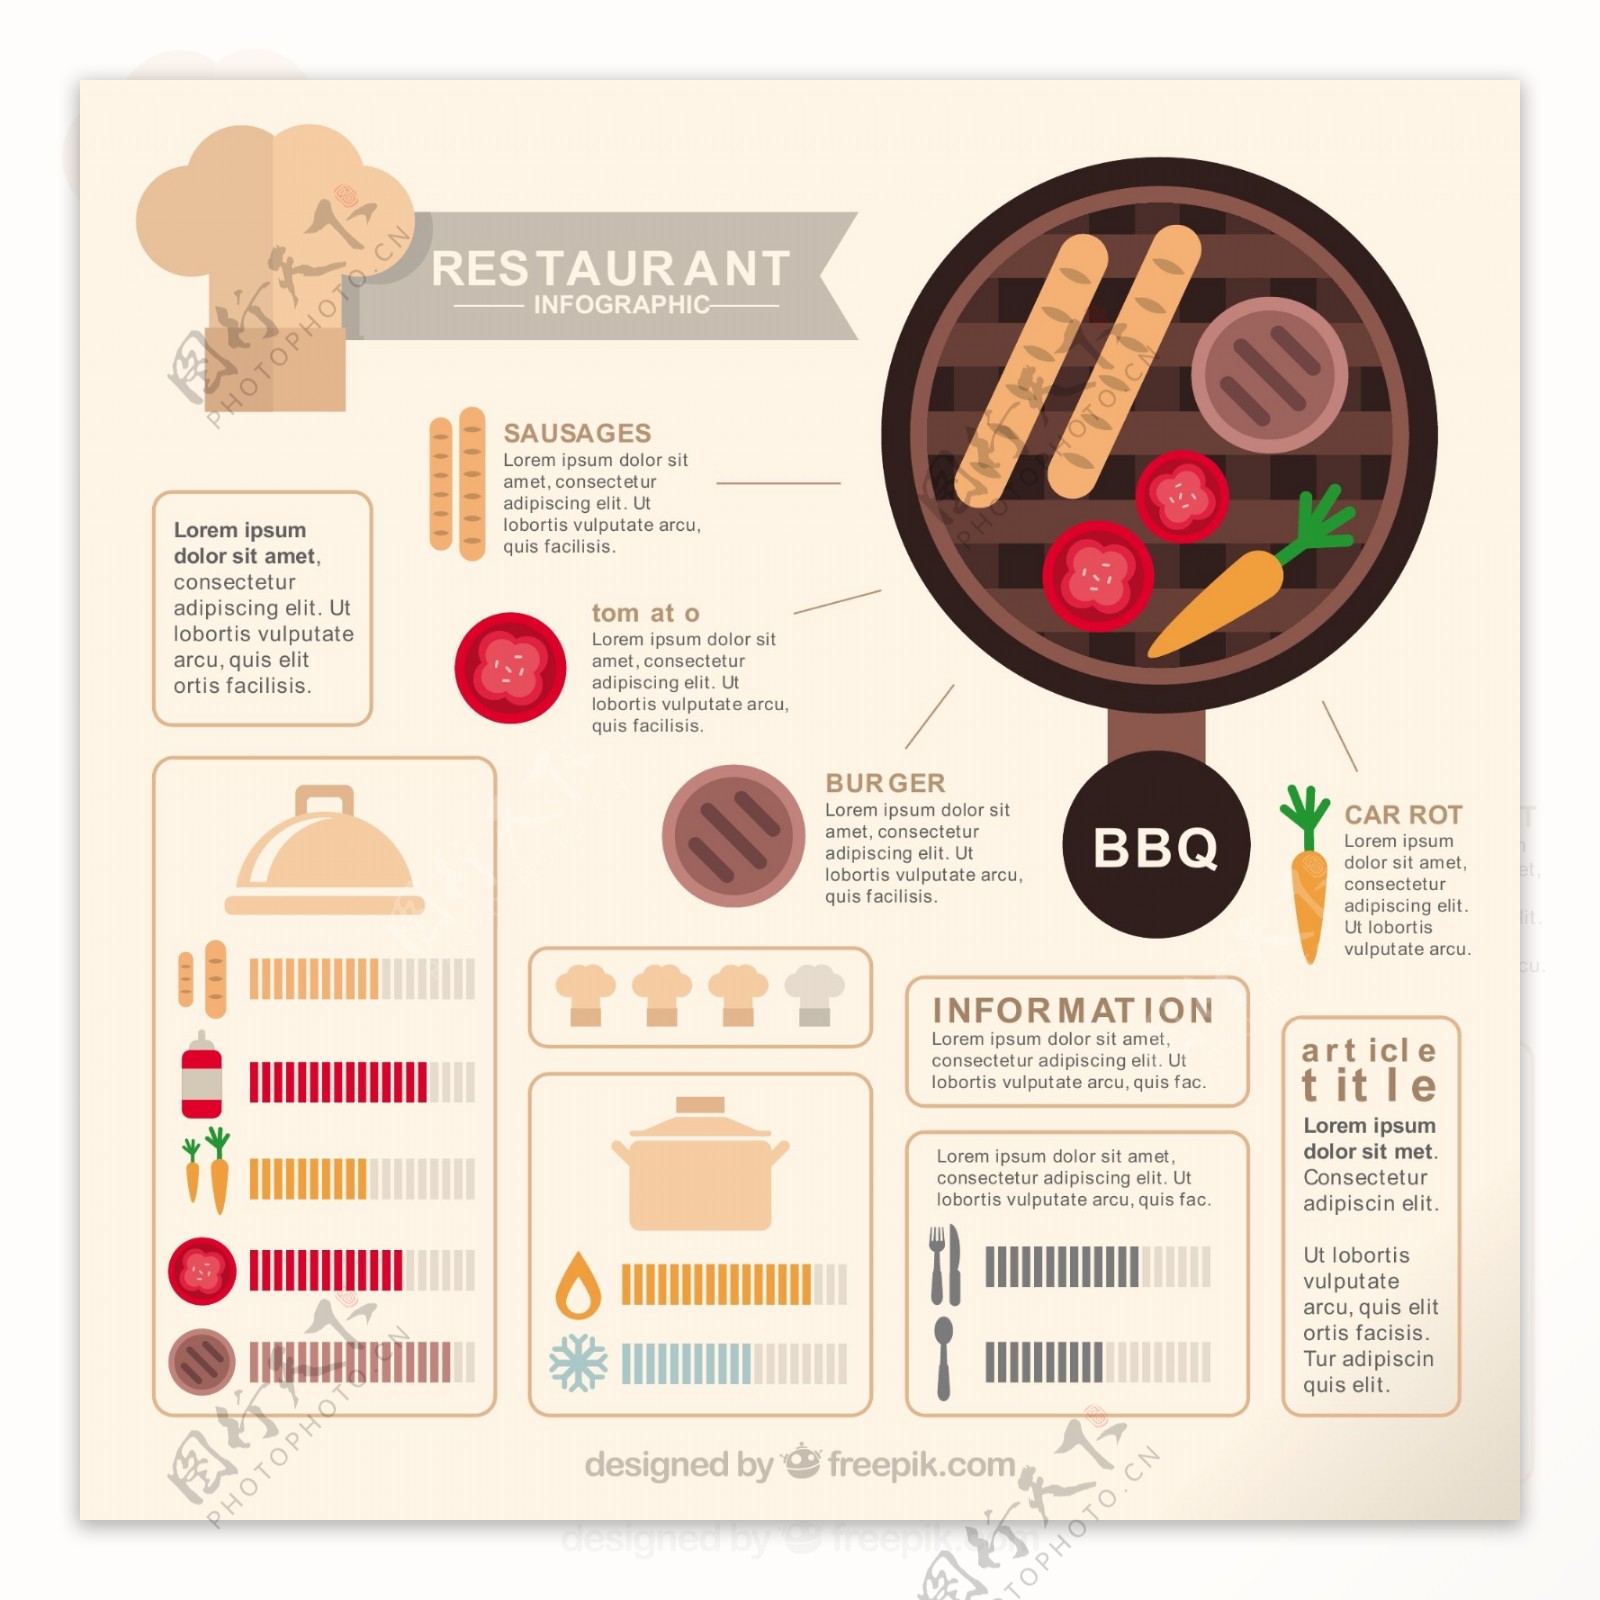 餐厅infography平面设计